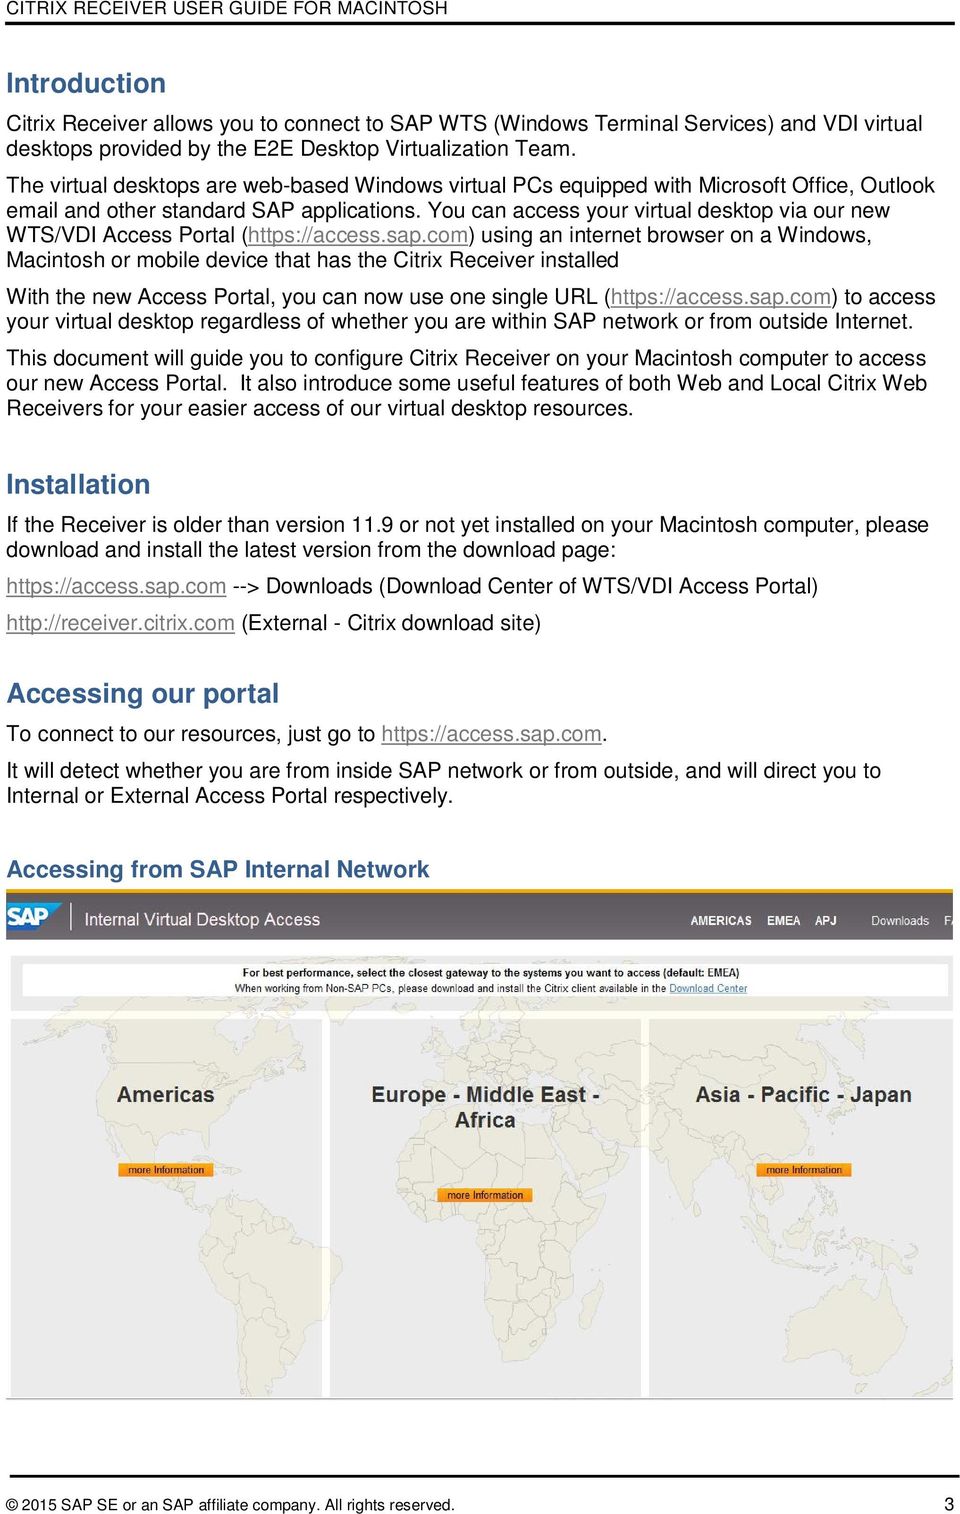 You can access your virtual desktop via our new WTS/VDI Access Portal (https://access.sap.